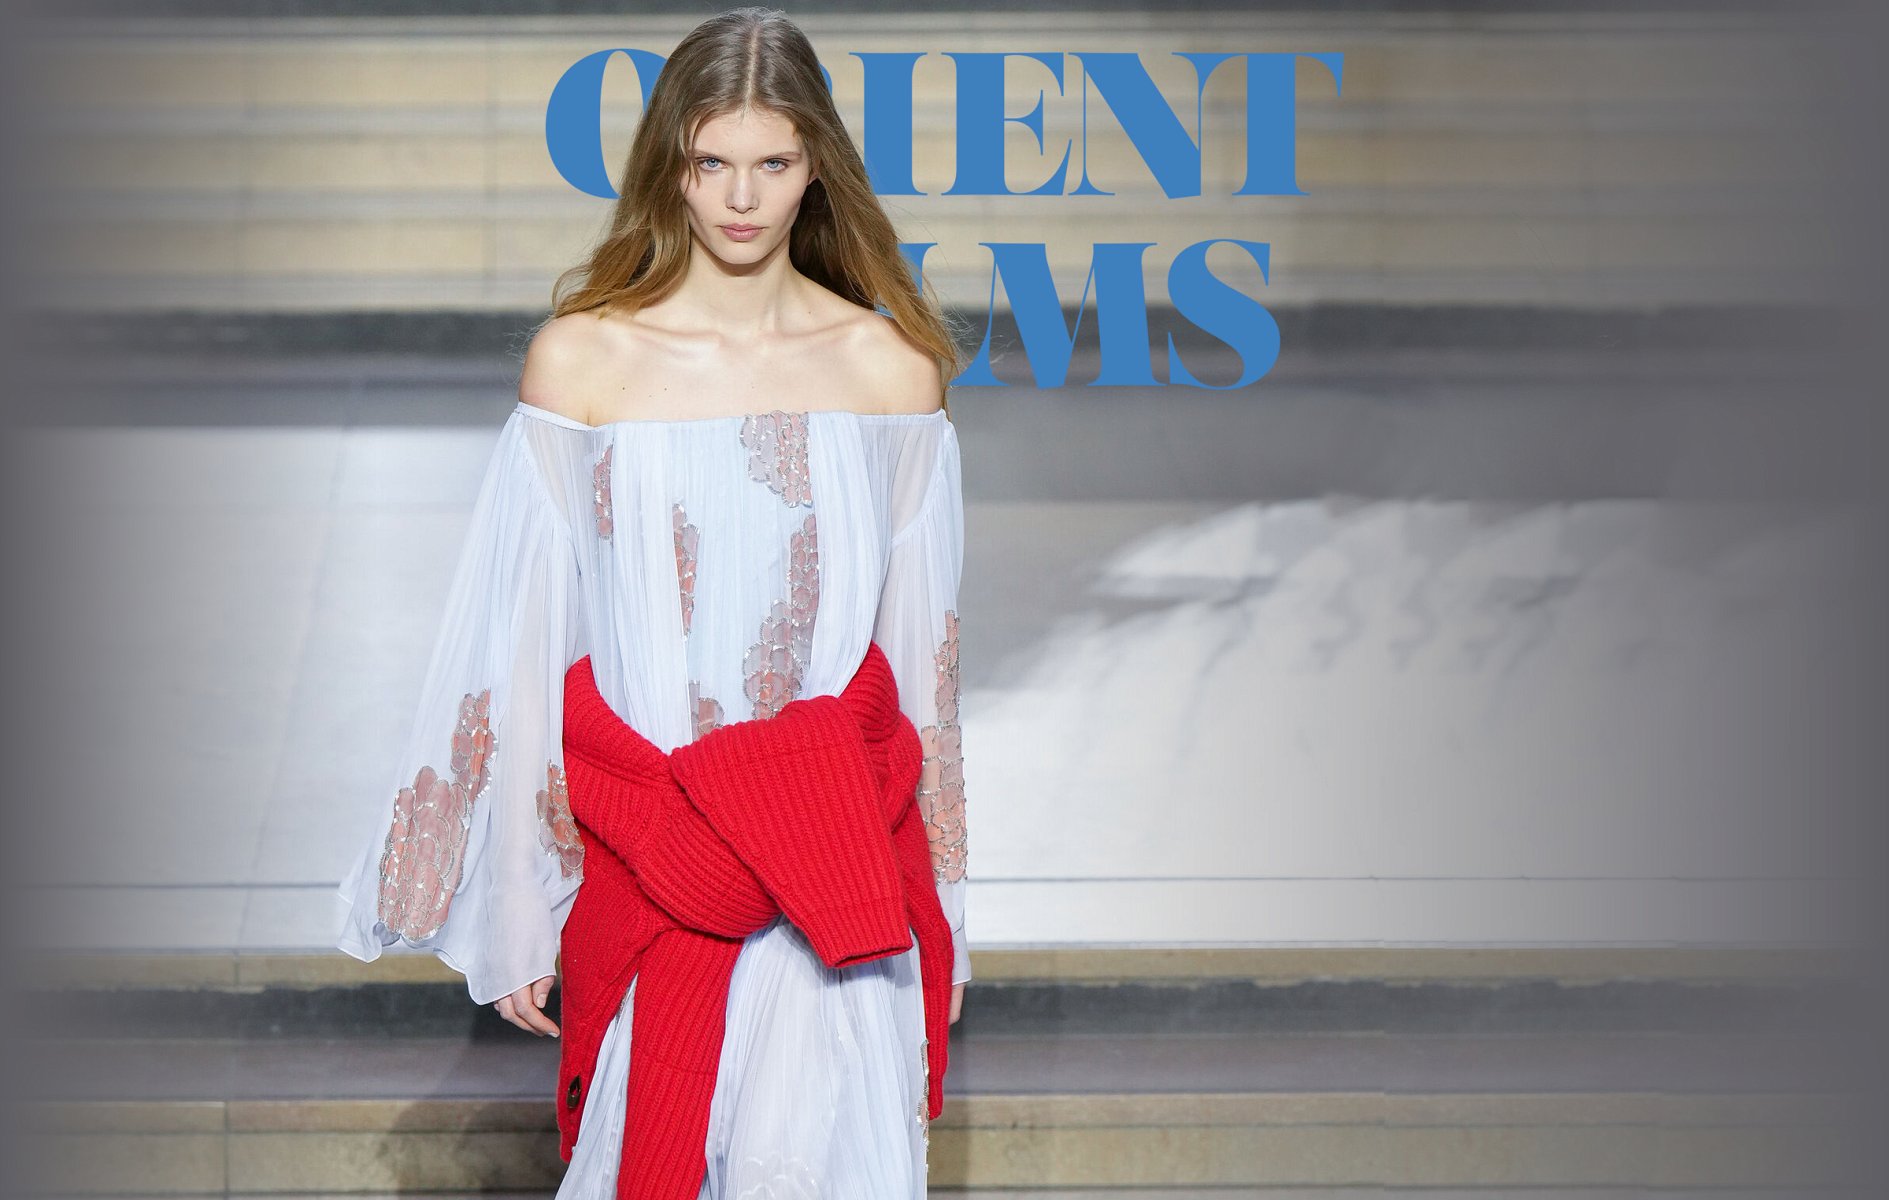 Paris Fashion Week: Louis Vuitton Fall 2022 Collection - Tom + Lorenzo